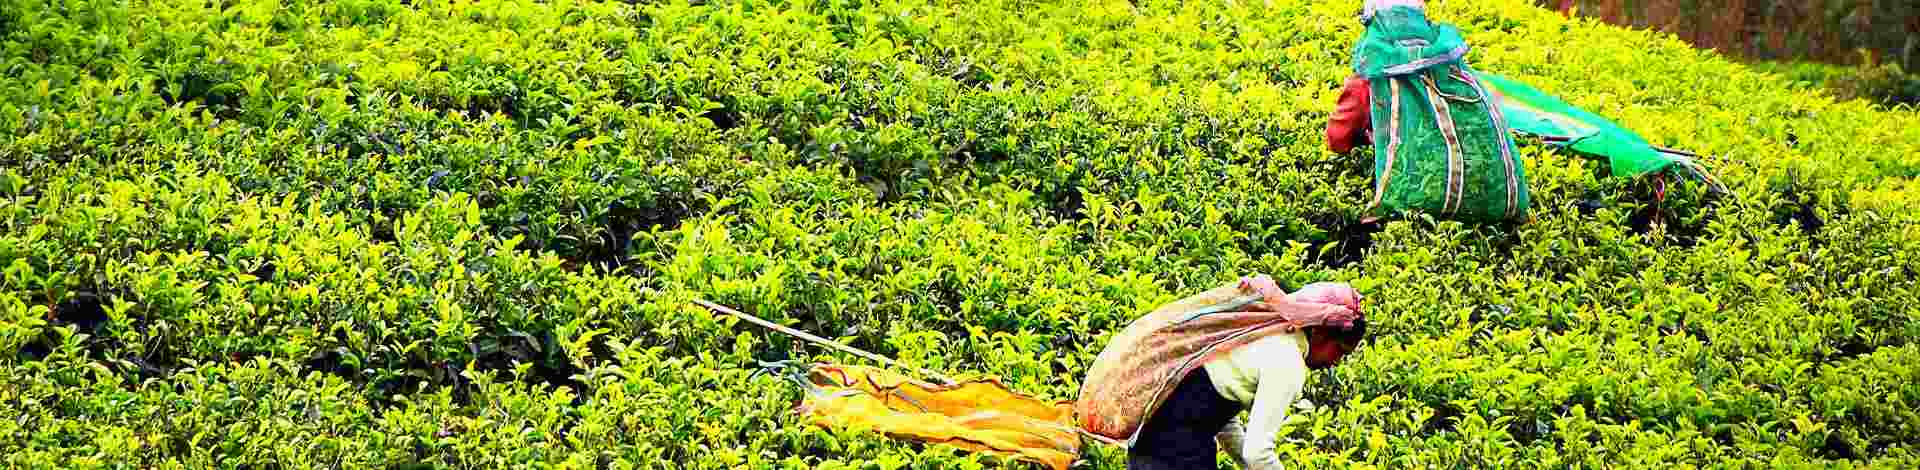 Plantations thé Sri Lanka cueilleuses - Asie Online